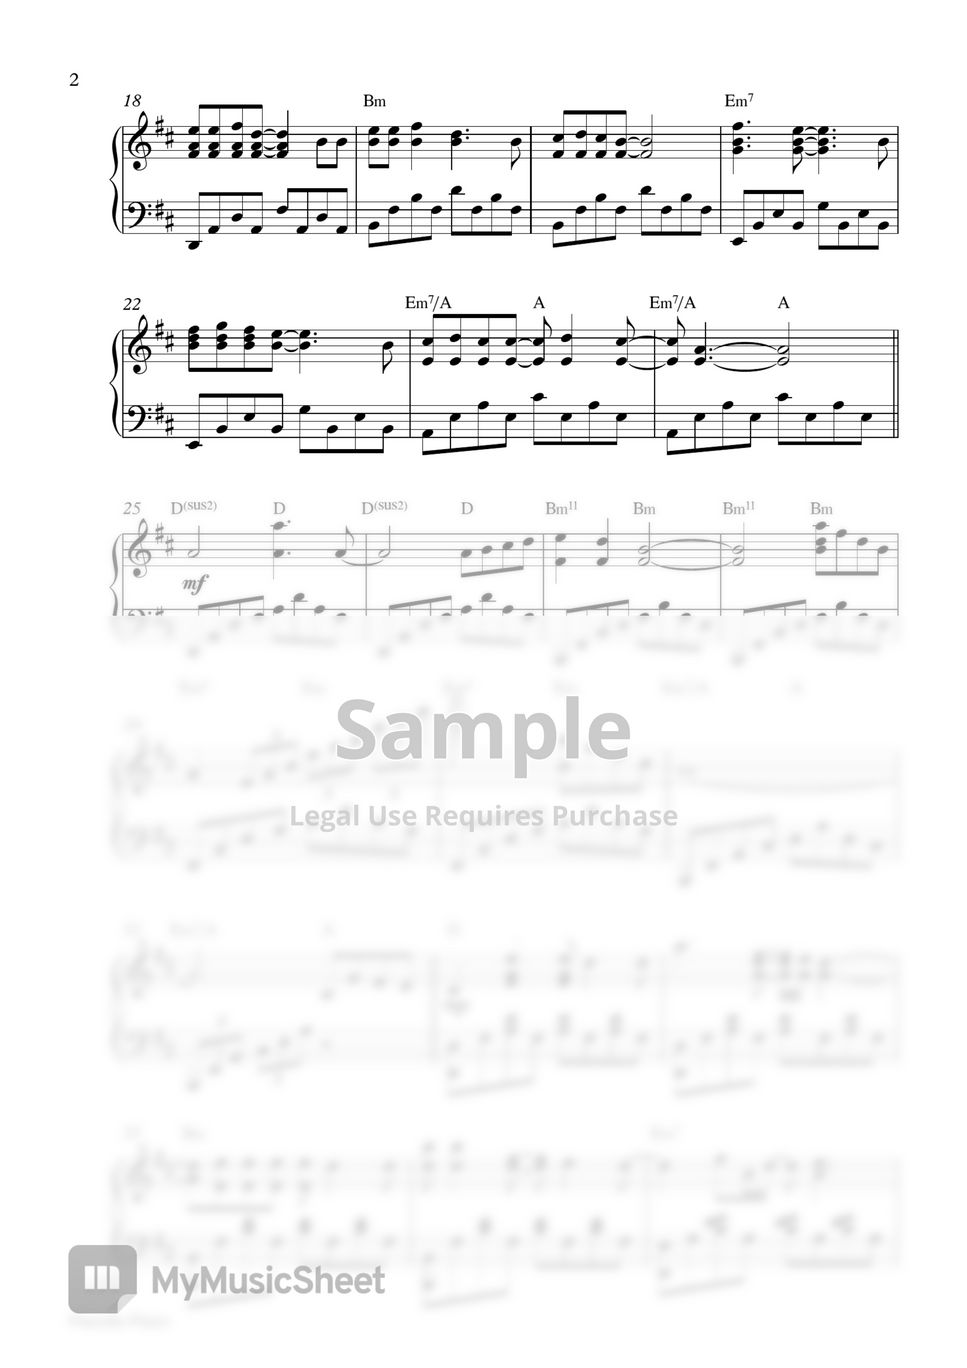 BLACKPINK (Ori. by Wham!) - Last Christmas (Piano Sheet) by Pianella Piano